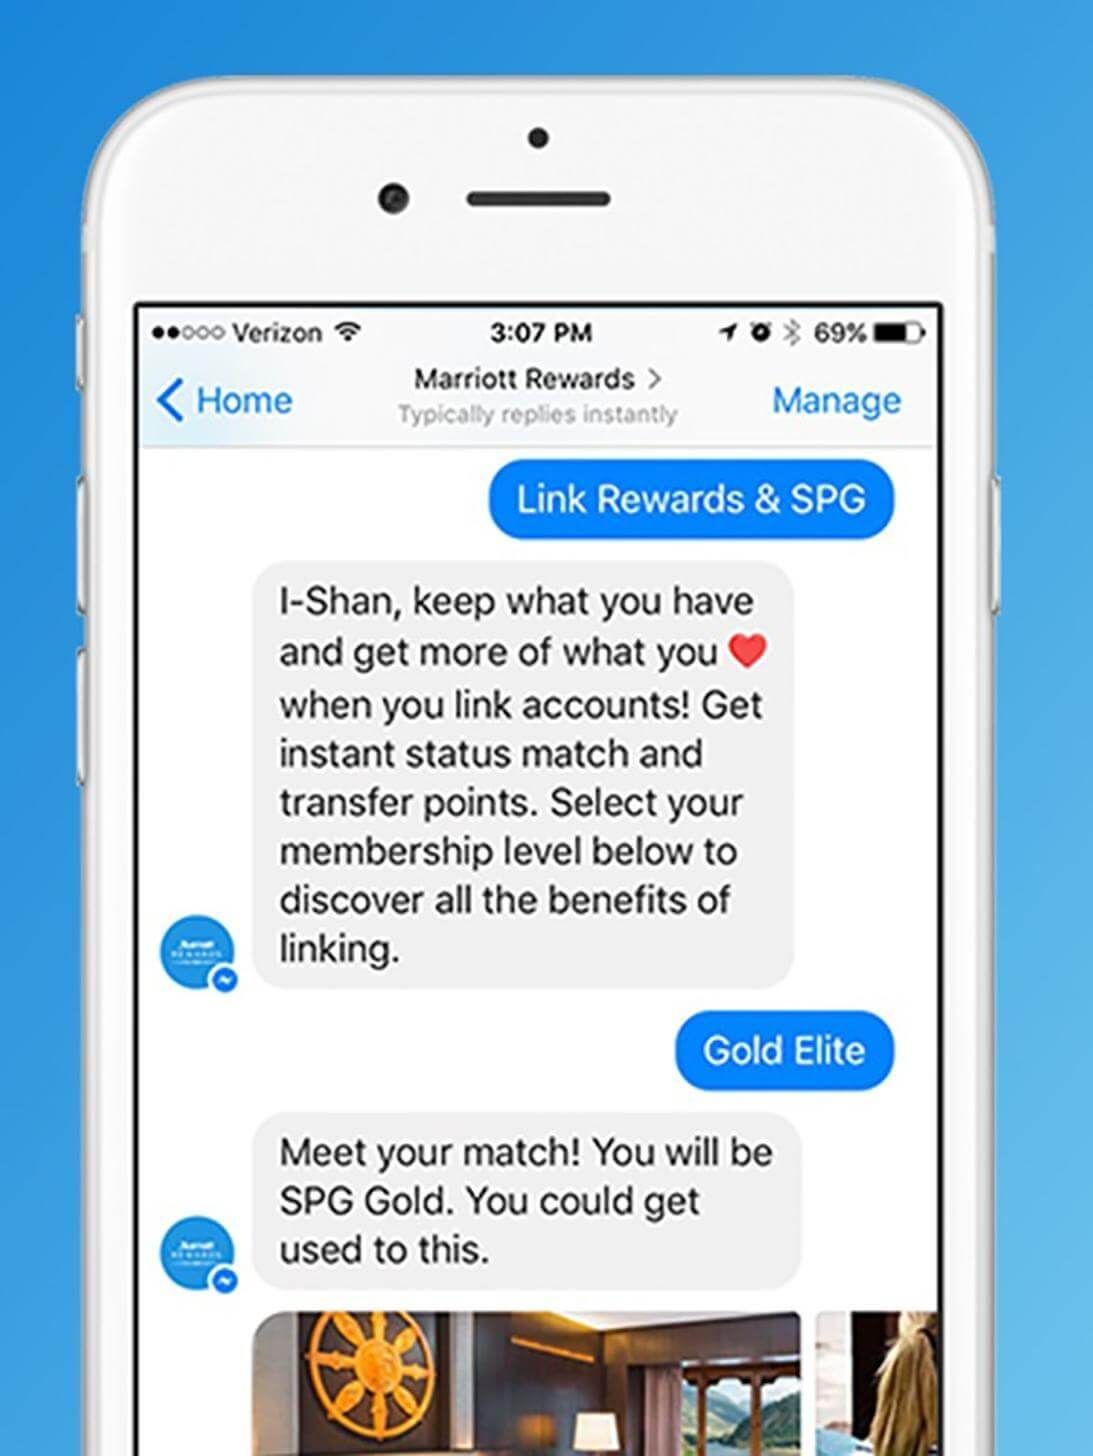 Marriotin Facebook-chatbot